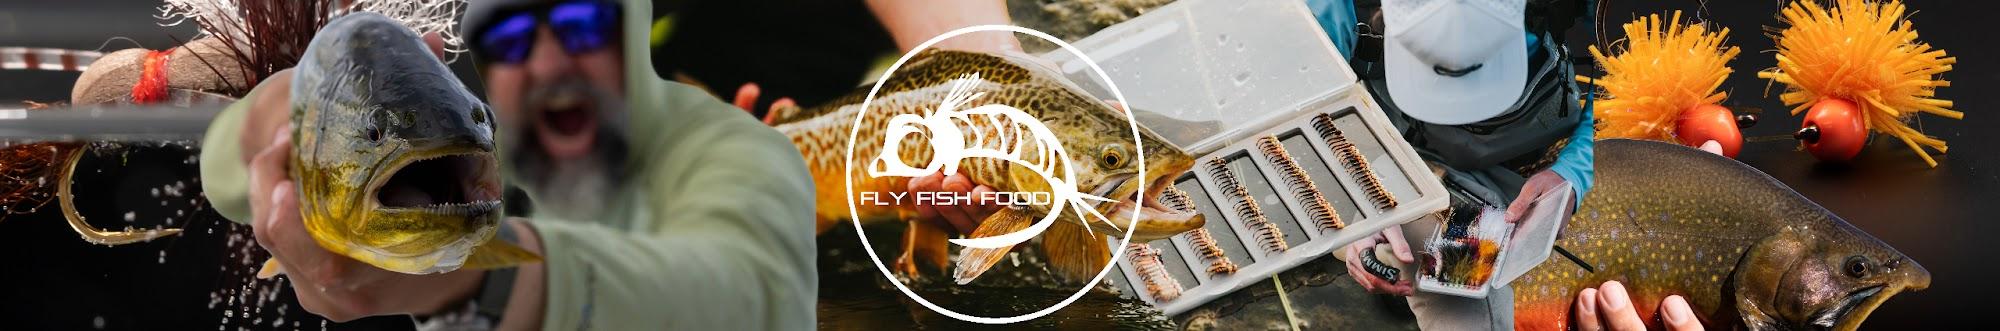 Fly Fish Food